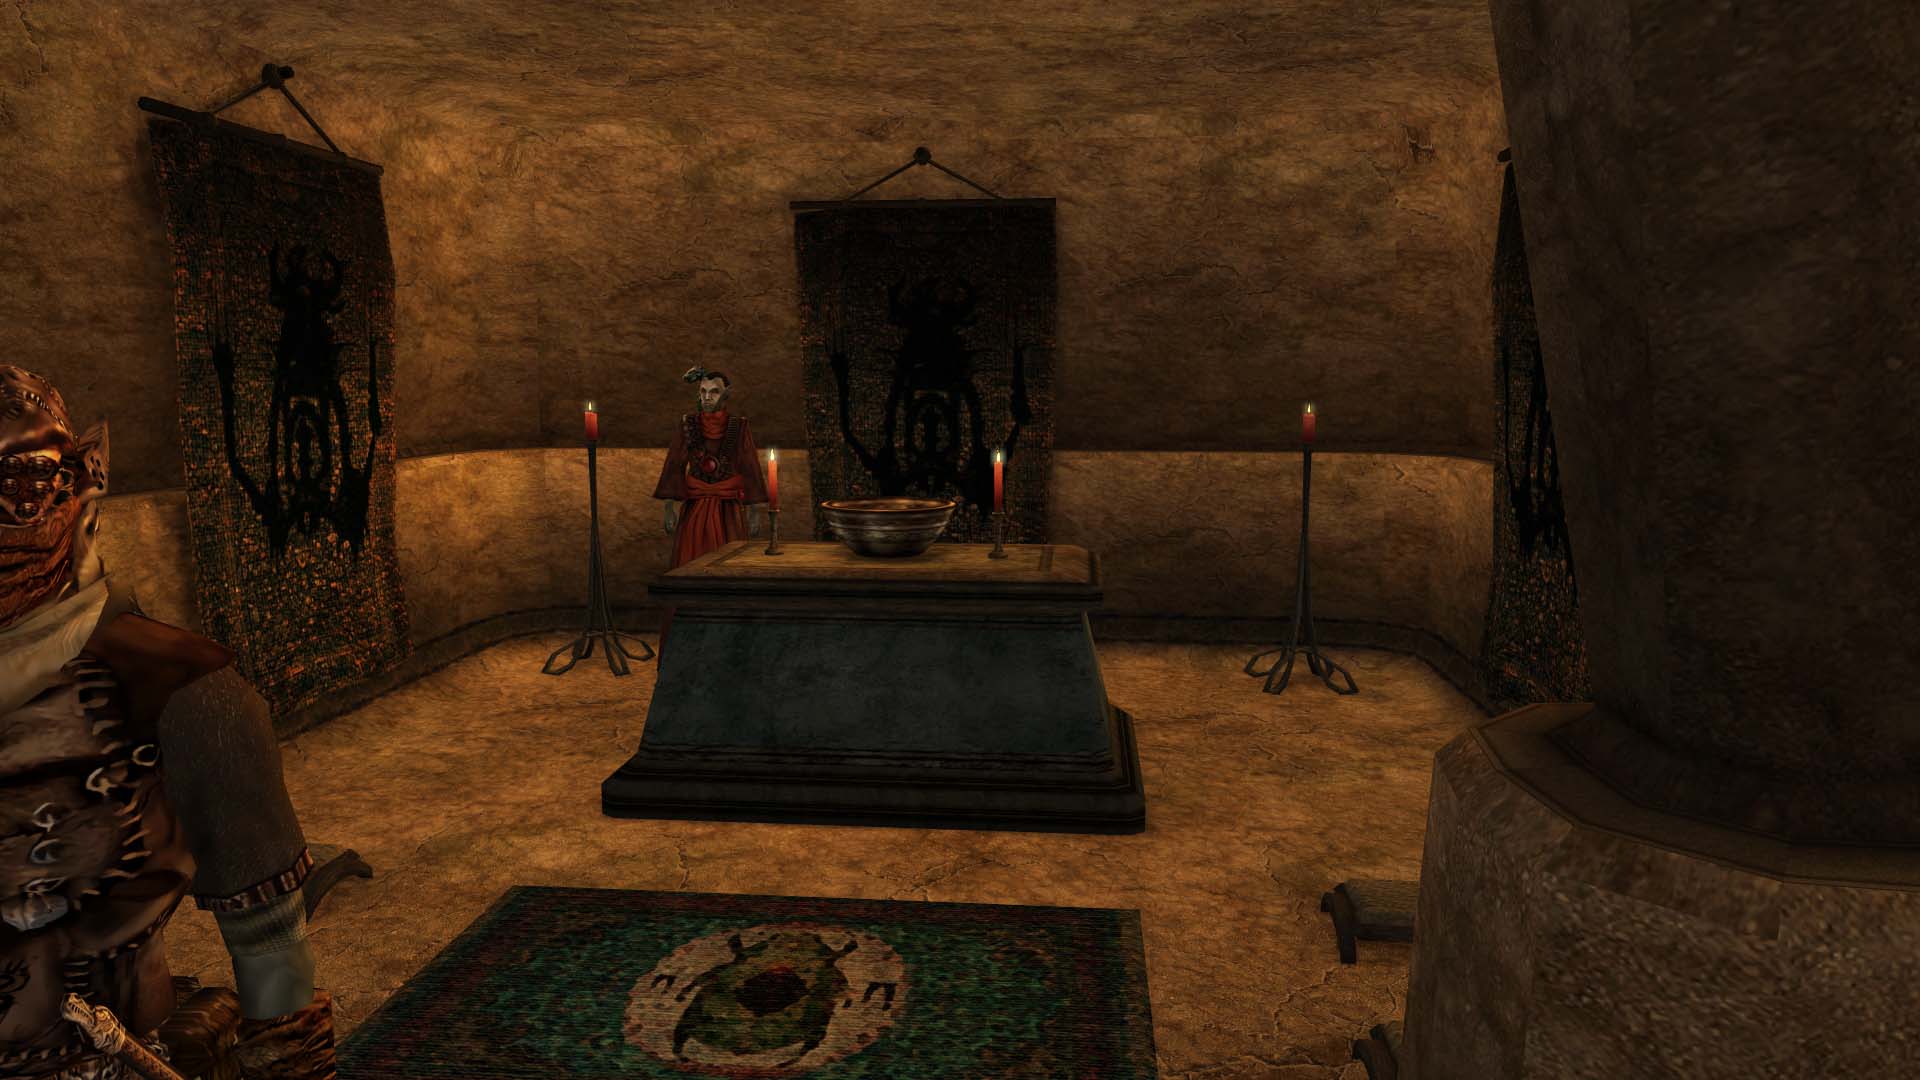 Morrowind awdad, День 2, 06.33 0003.jpg